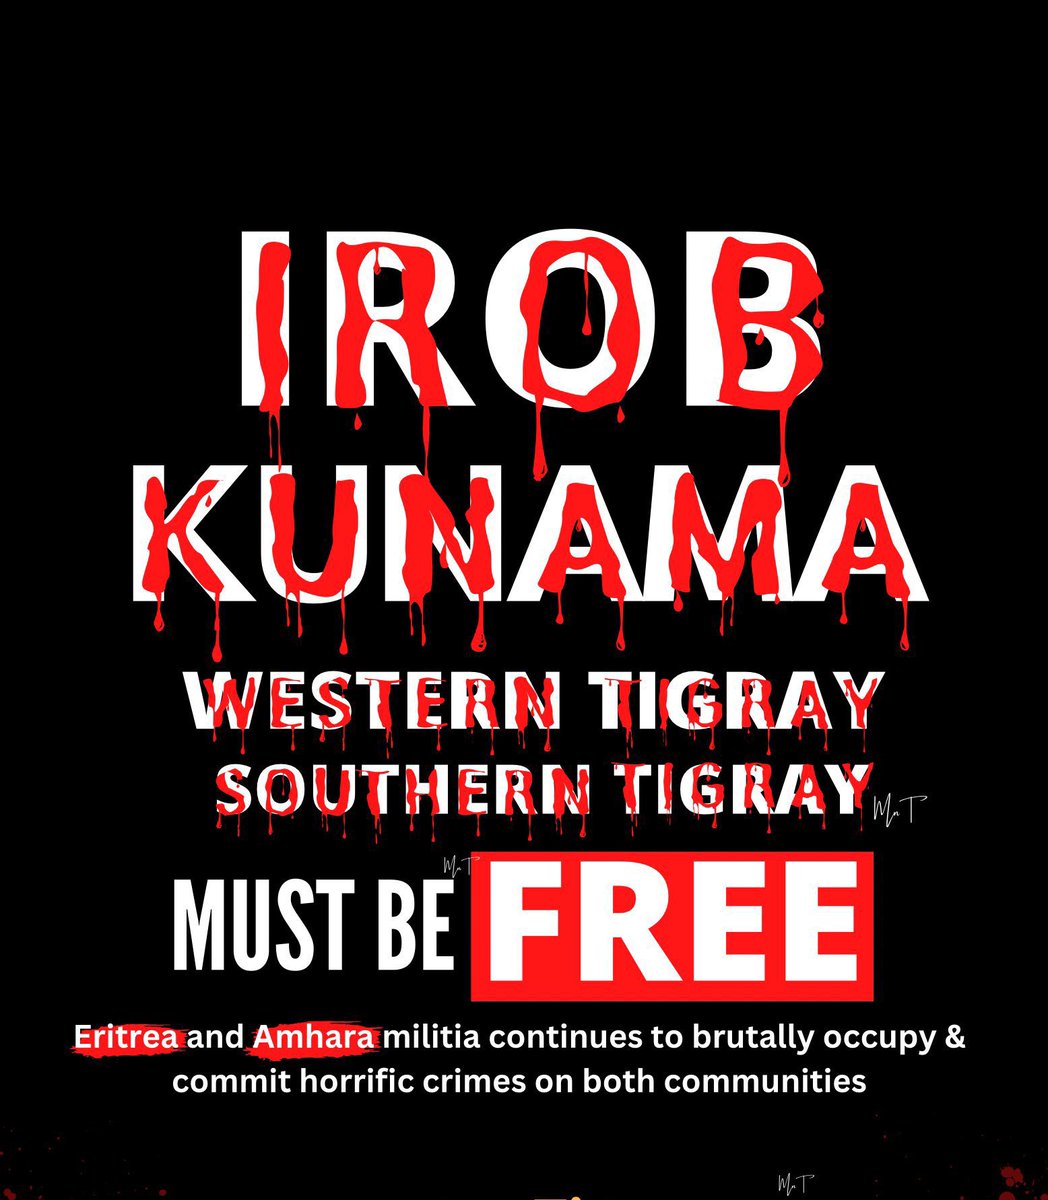 The November truce ( CoHA ) agrmt in Tigray has not brought about an end to the ethnic cleansing of Tigrayans in Western Tigray and Irob. #Justice4Tigray @UN #AmharaOutOfTigray #ICHREE @SecBlinken @JosepBorrellF @SenatorMenendez @UNHumanRights @USAmbUN @amnesty @hrw